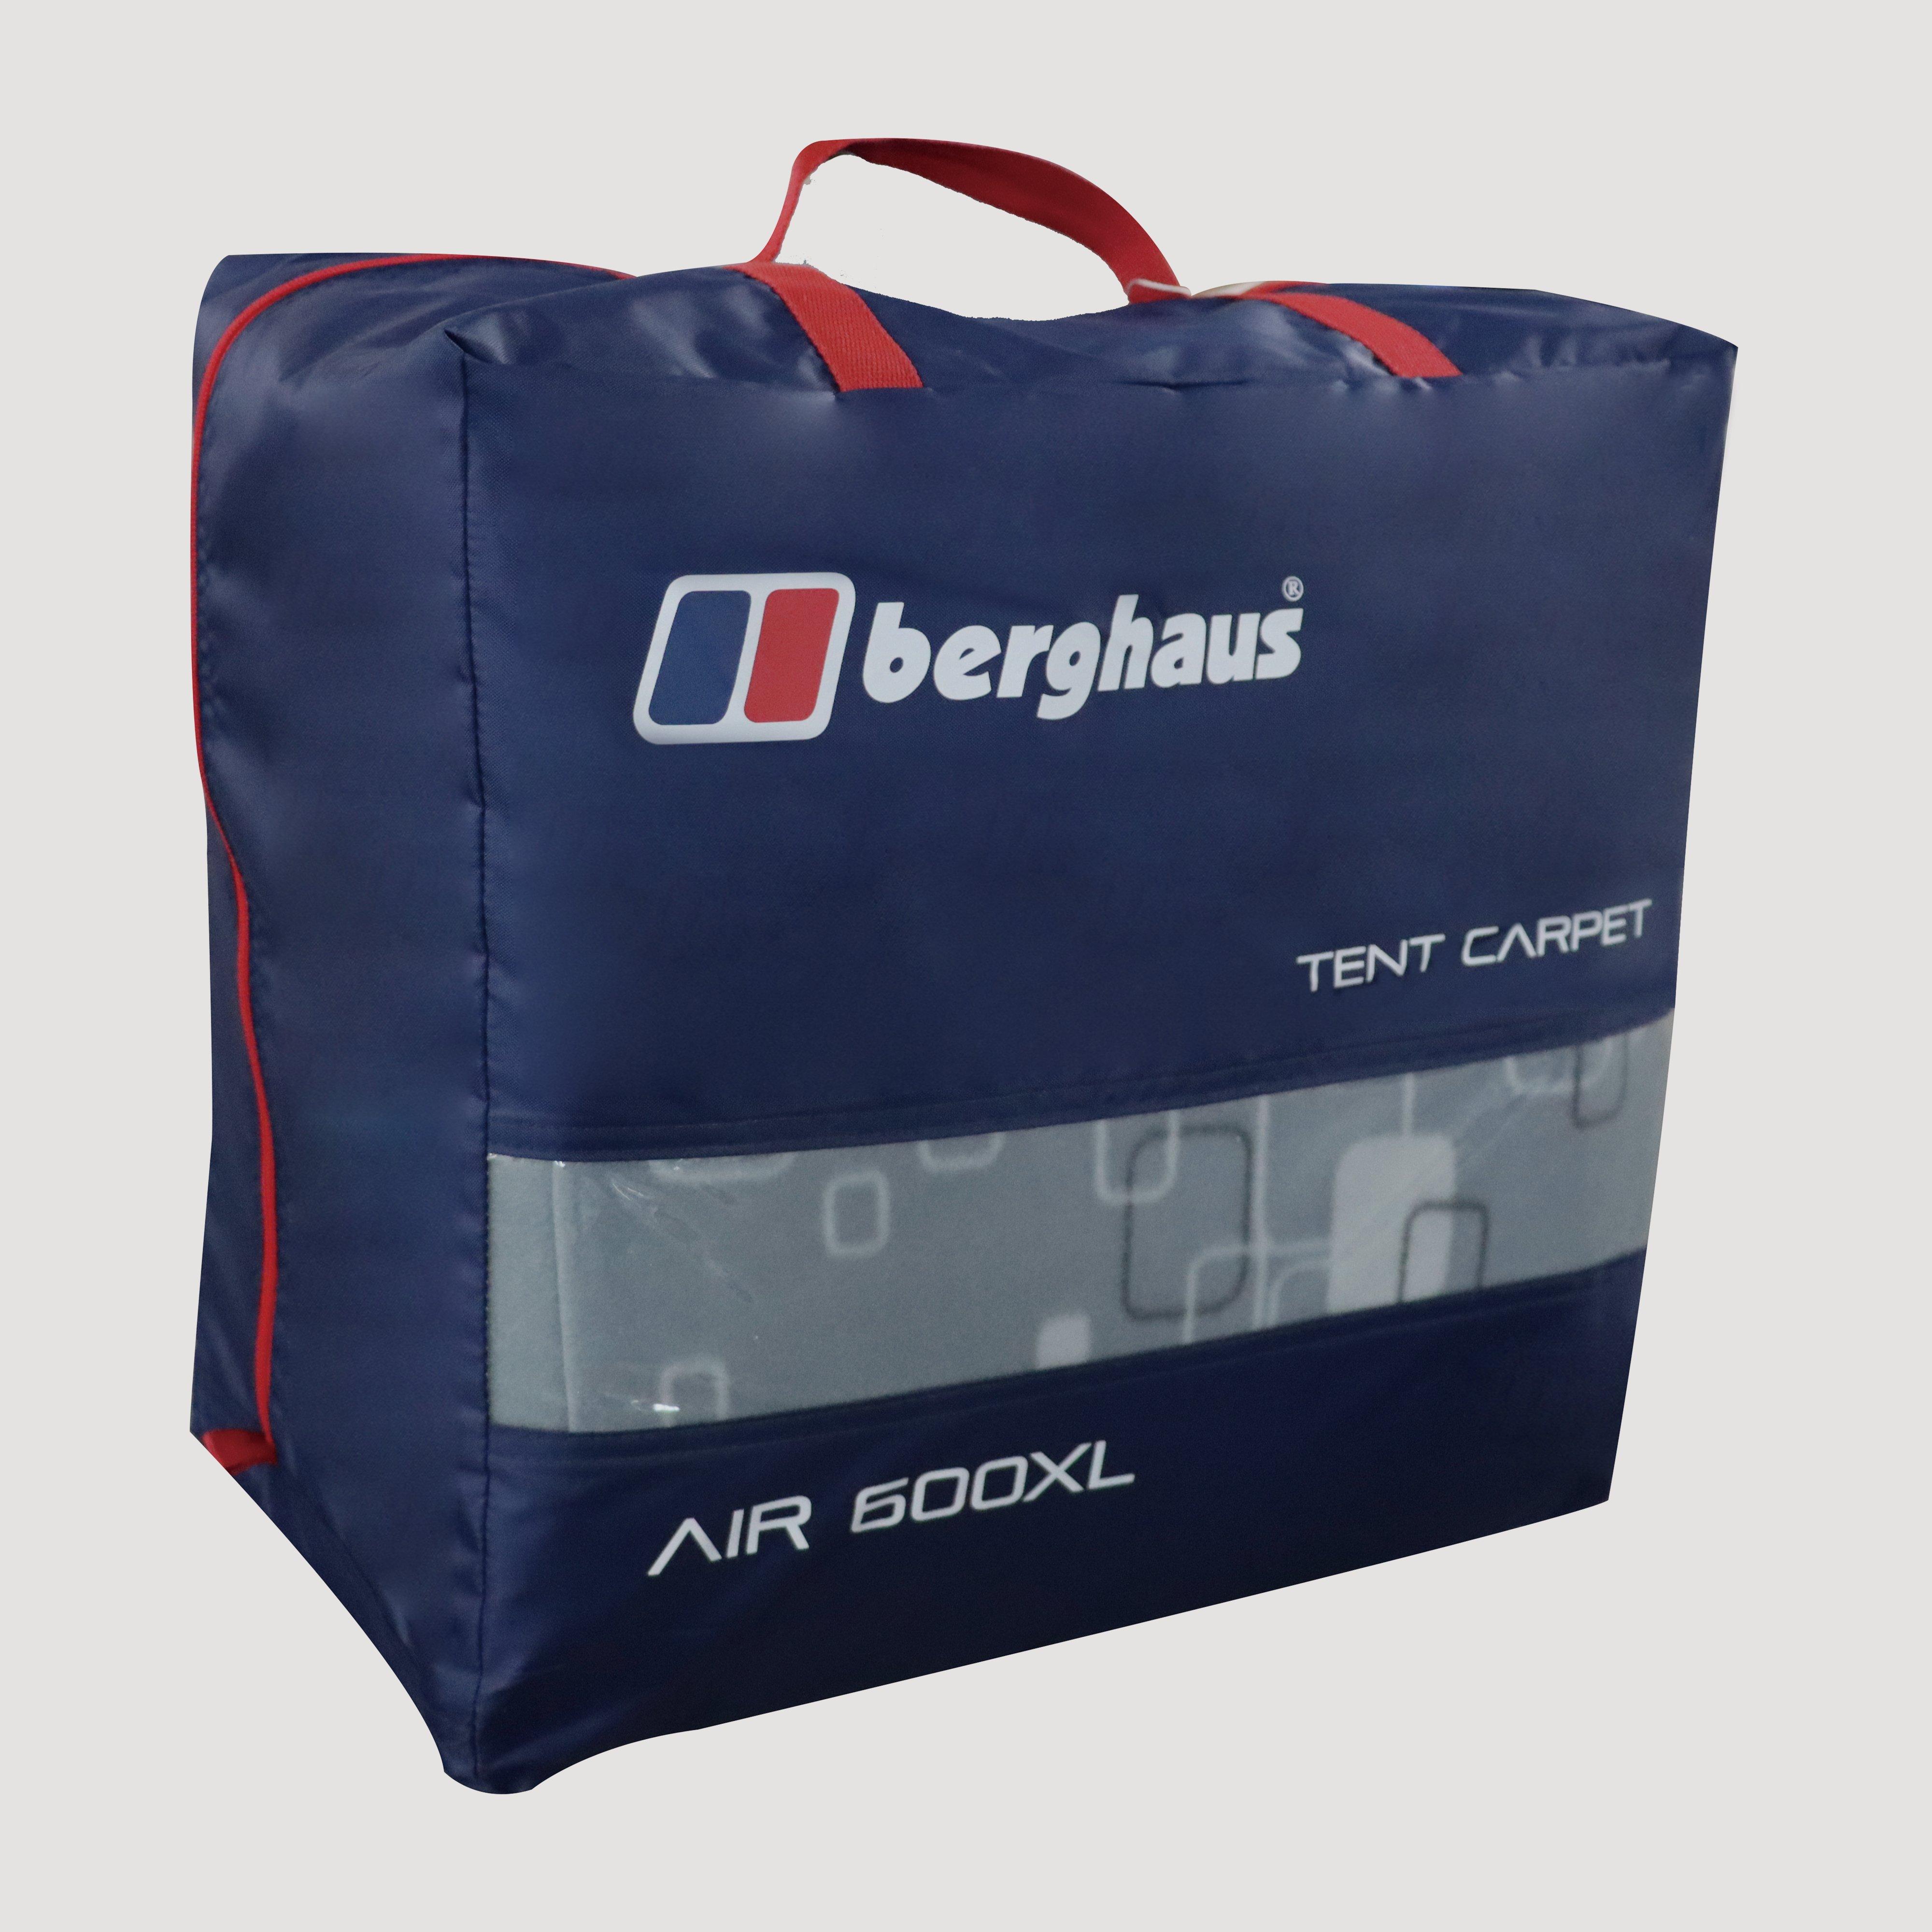  Berghaus Air 600XL/6.1XL/6XL Tent Carpet, Grey